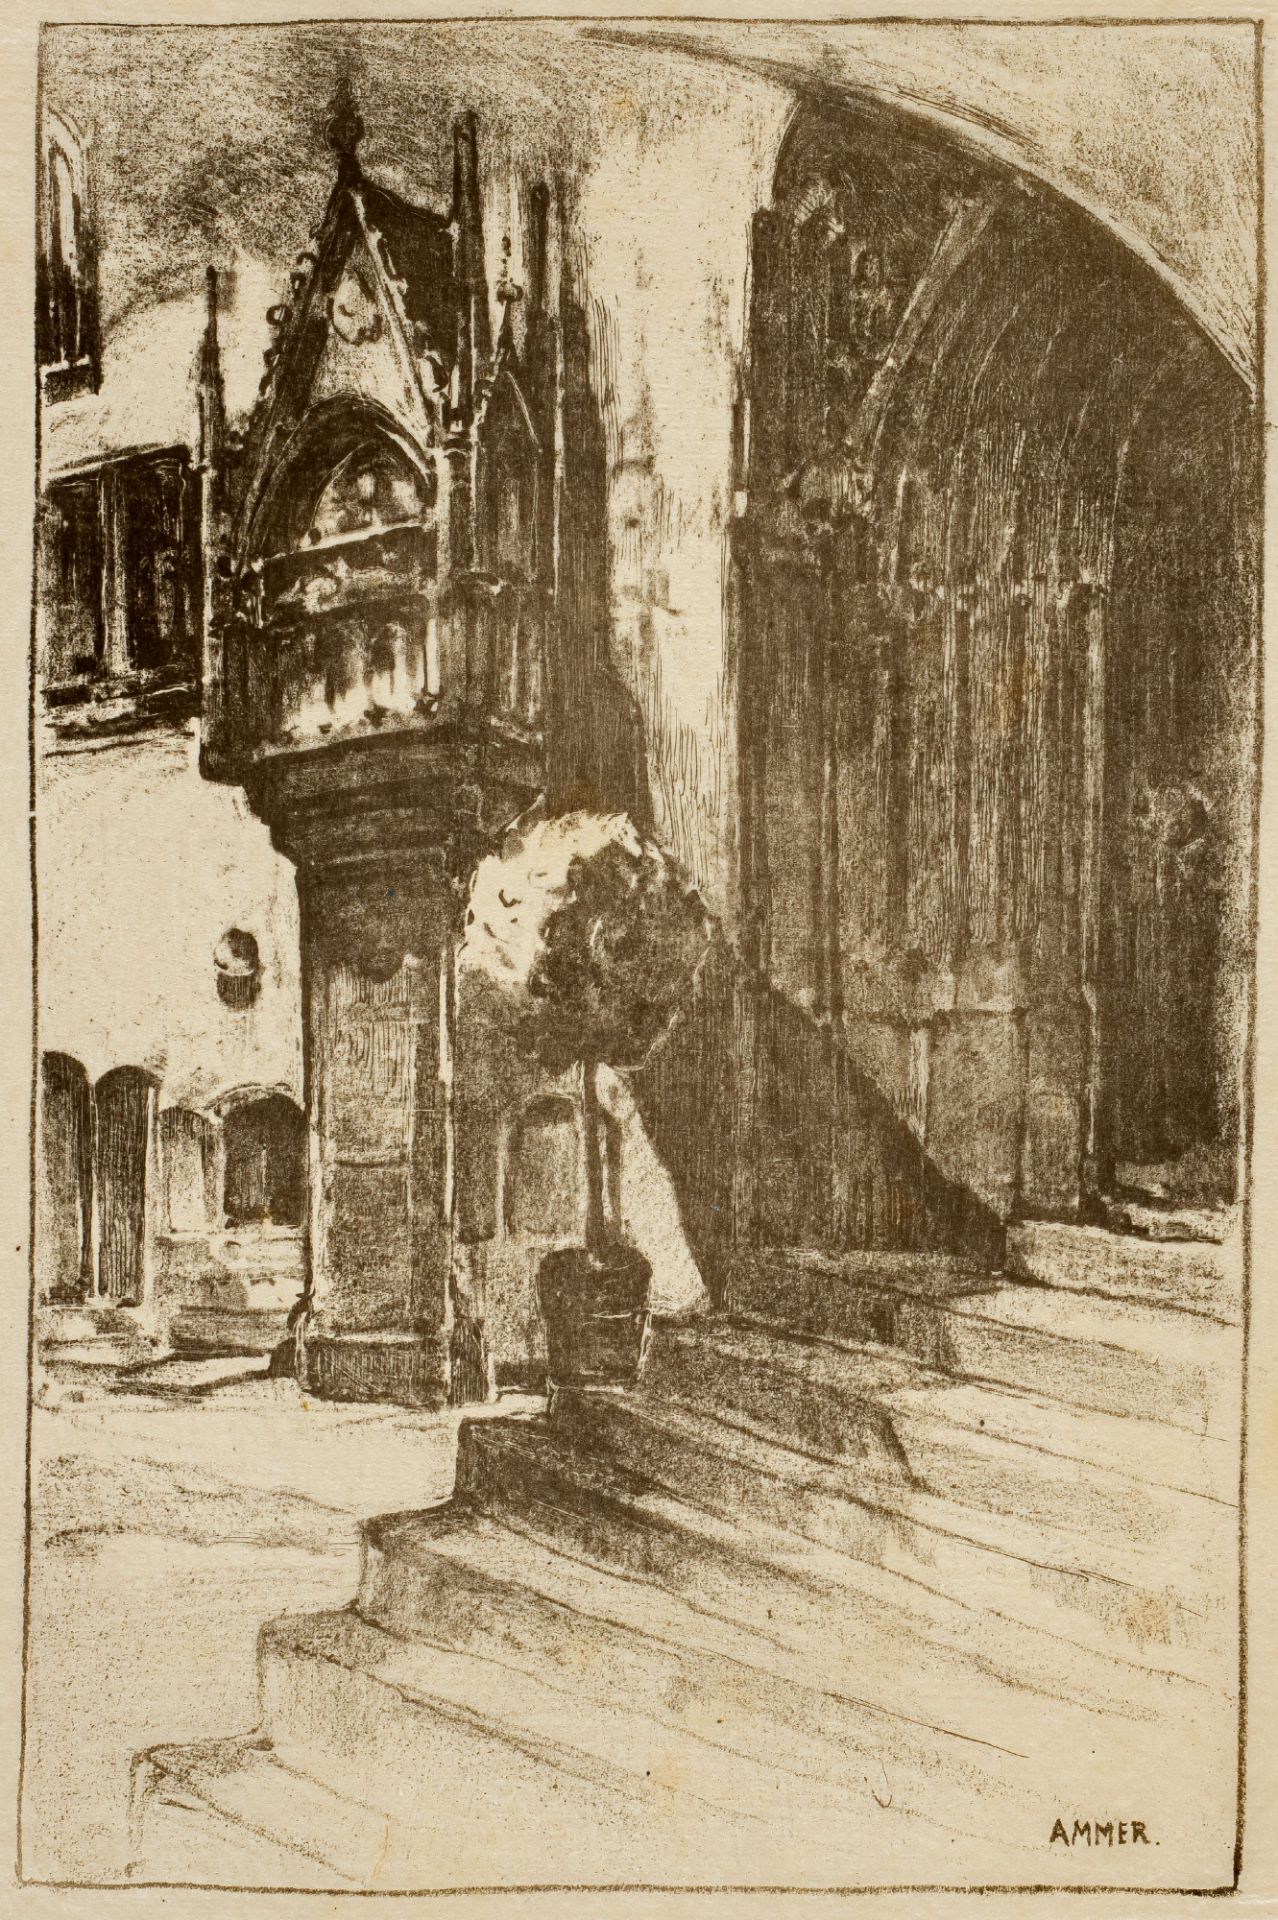 Ammer, Karoline (Lina) | 1871 Landau - 1935 Regensburg - Image 4 of 5